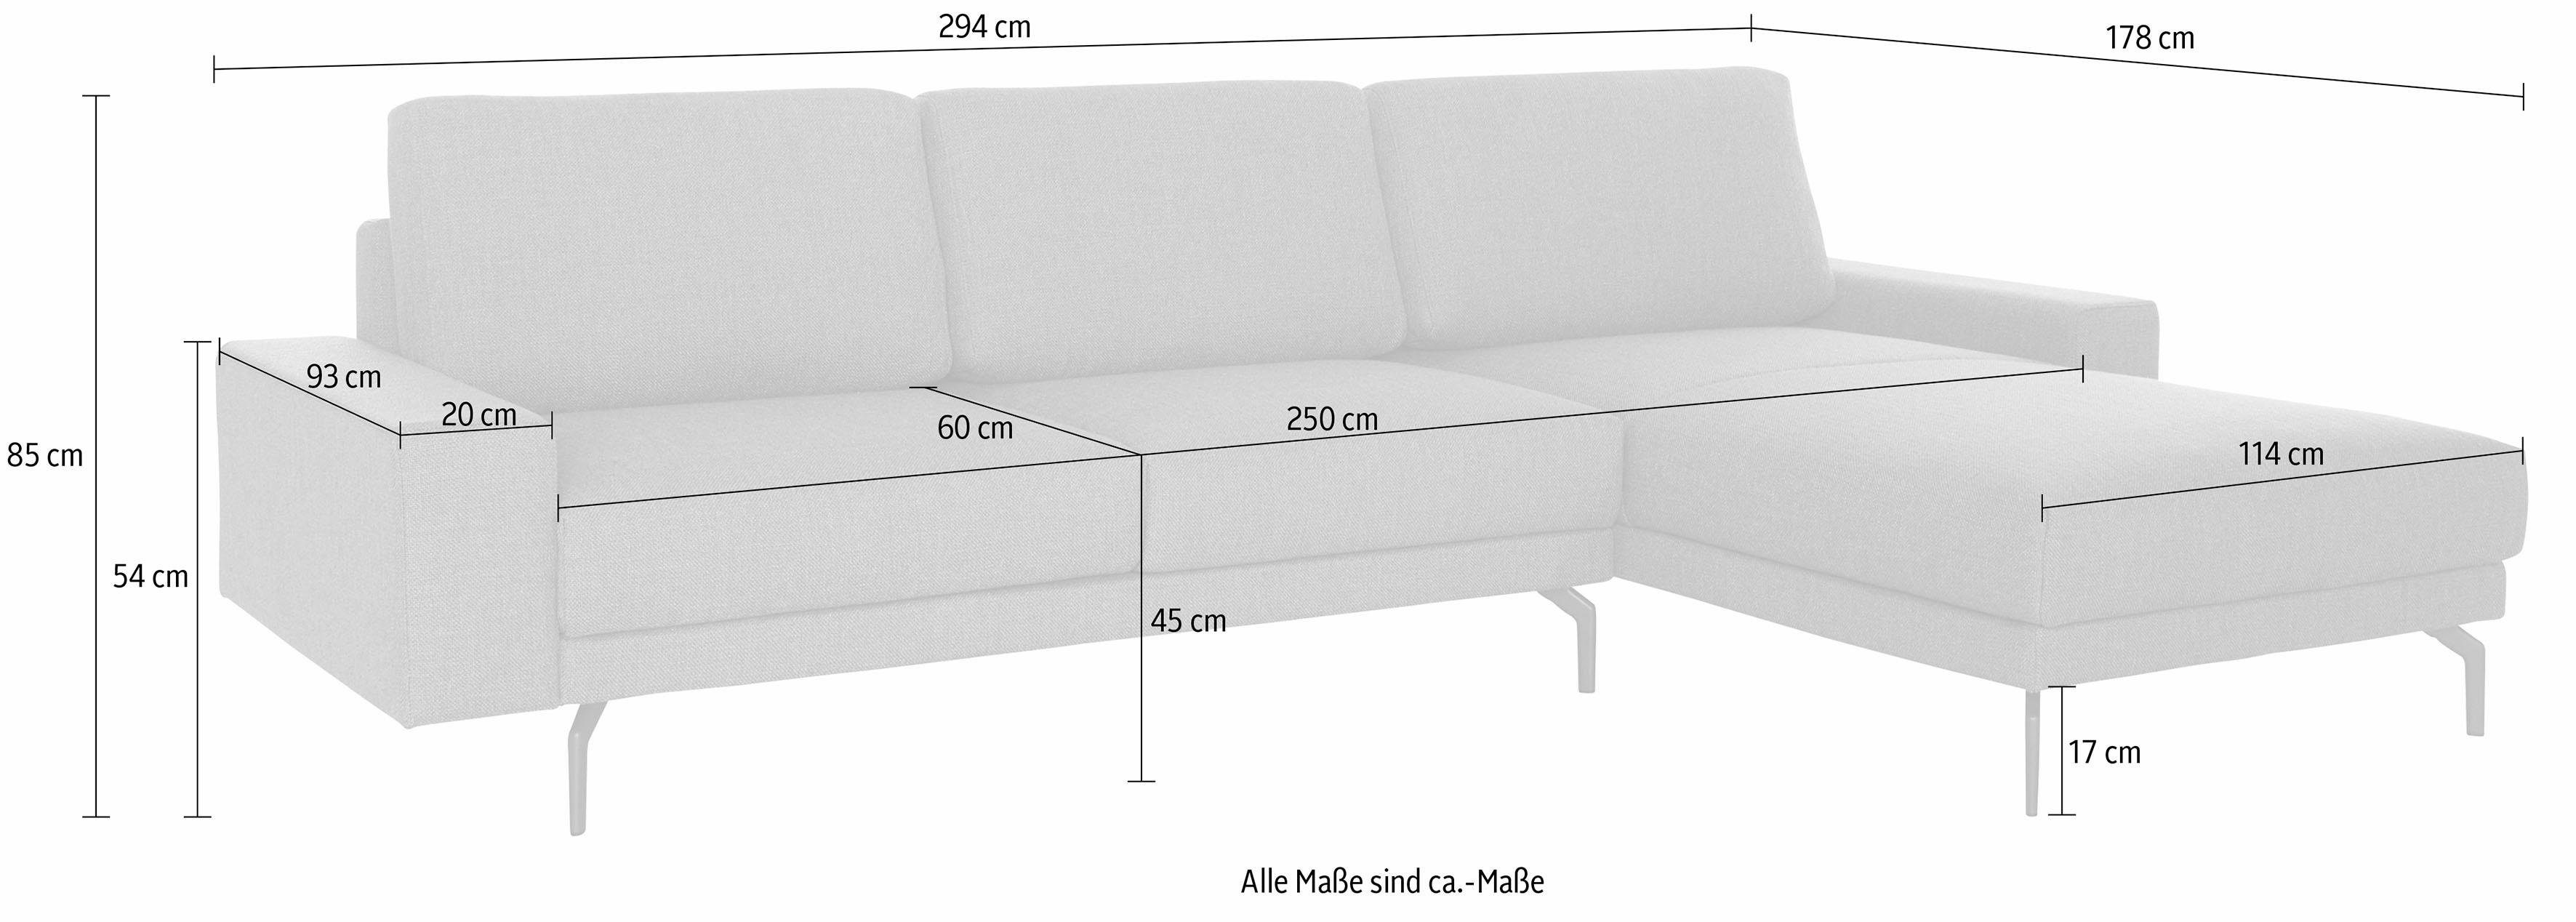 hülsta sofa Ecksofa cm breit umbragrau, niedrig, Breite Alugussfüße 294 und Armlehne in hs.450,